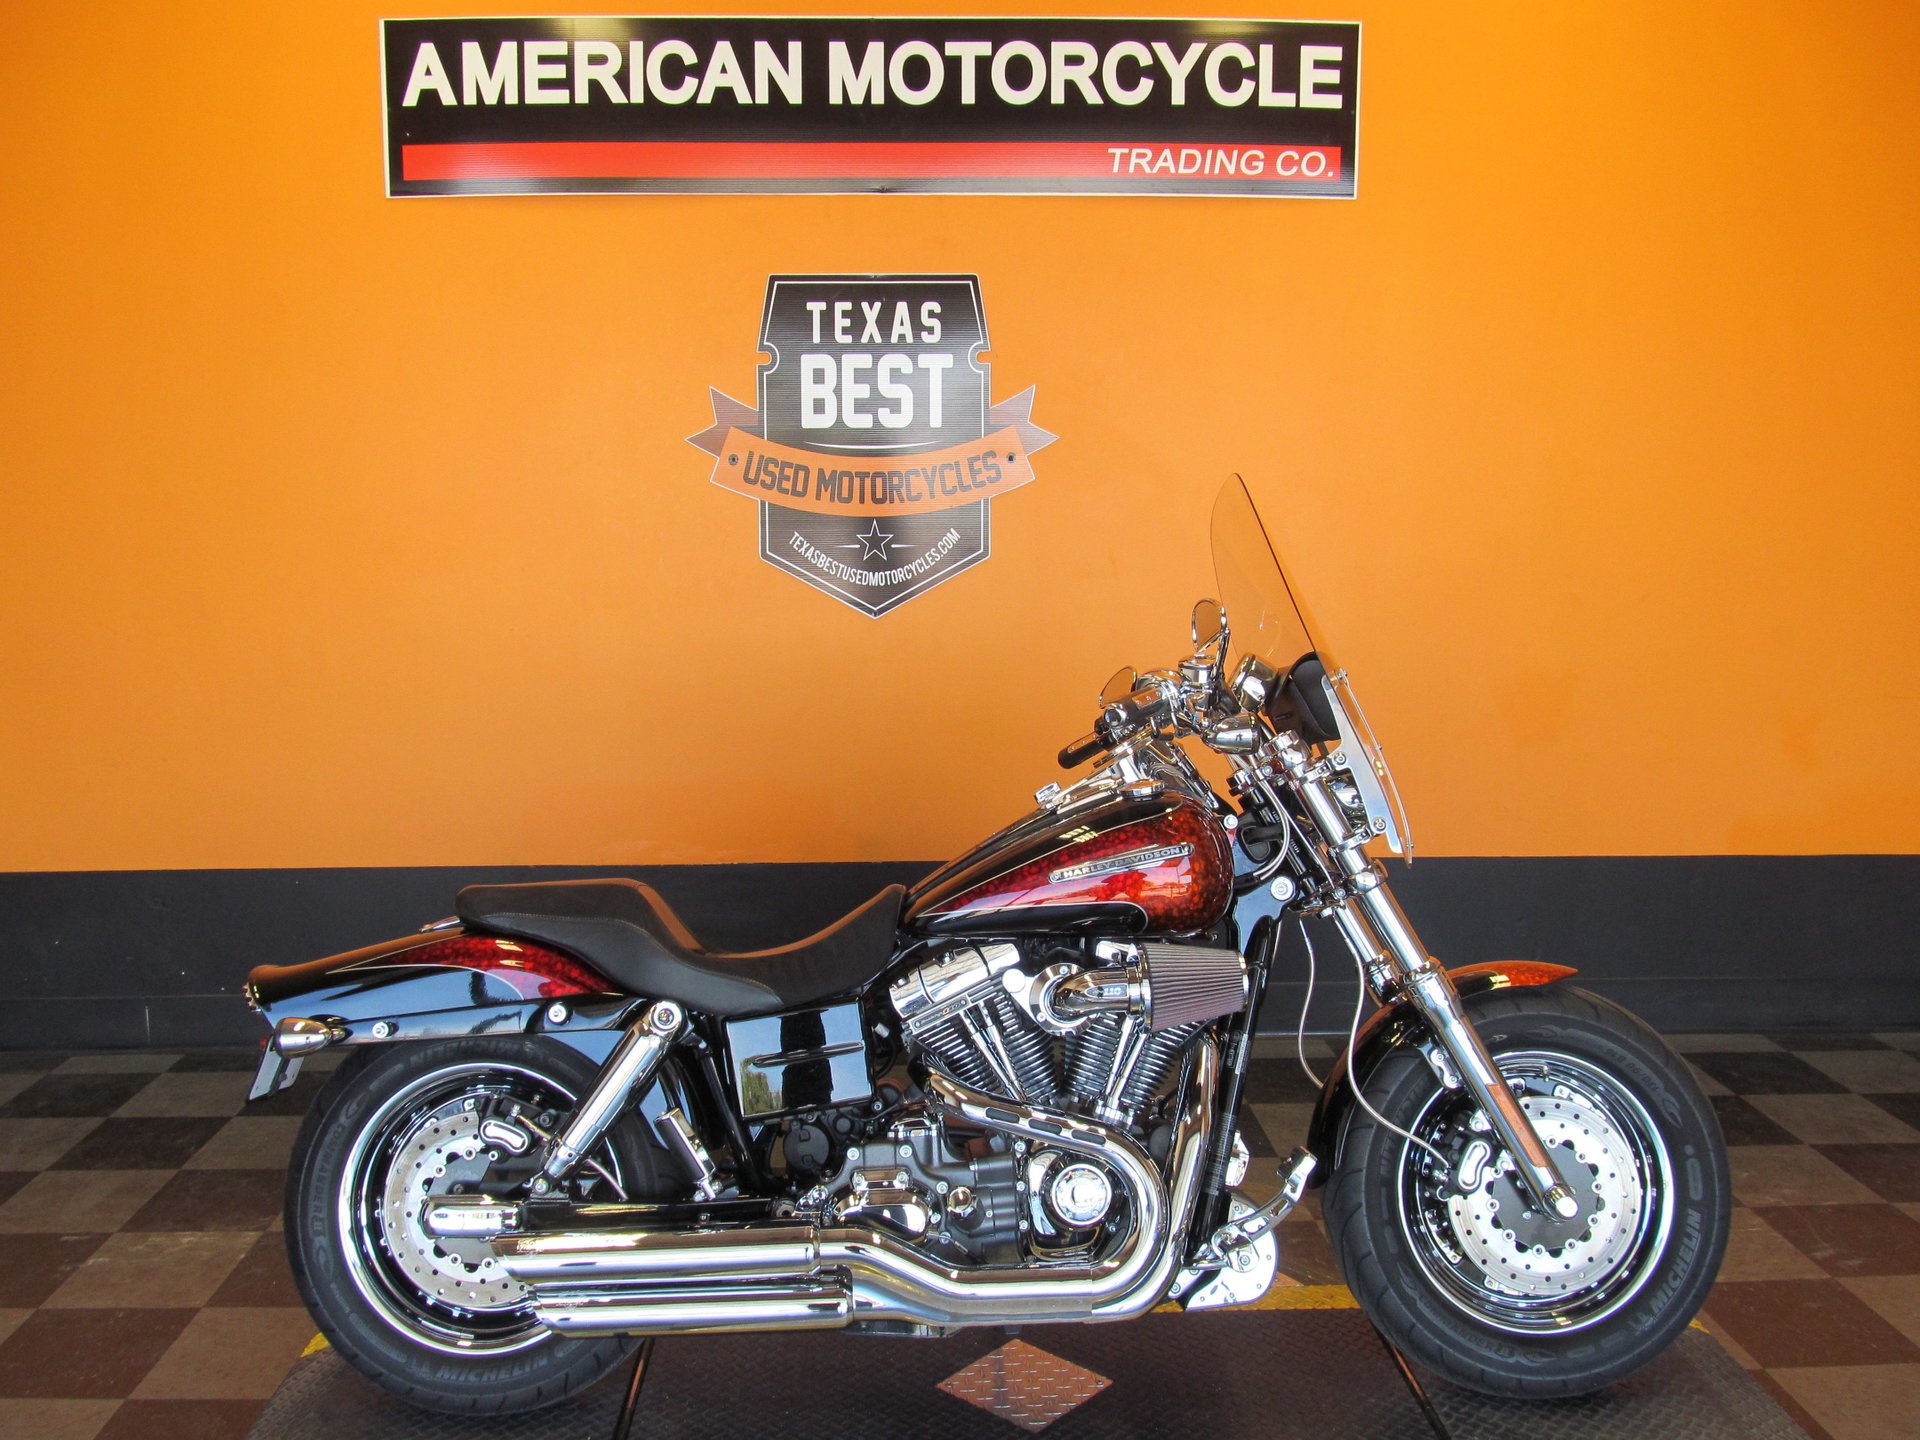 2009 Harley Davidson Dyna Fat Bob American Motorcycle Trading Company Used Harley Davidson Motorcycles